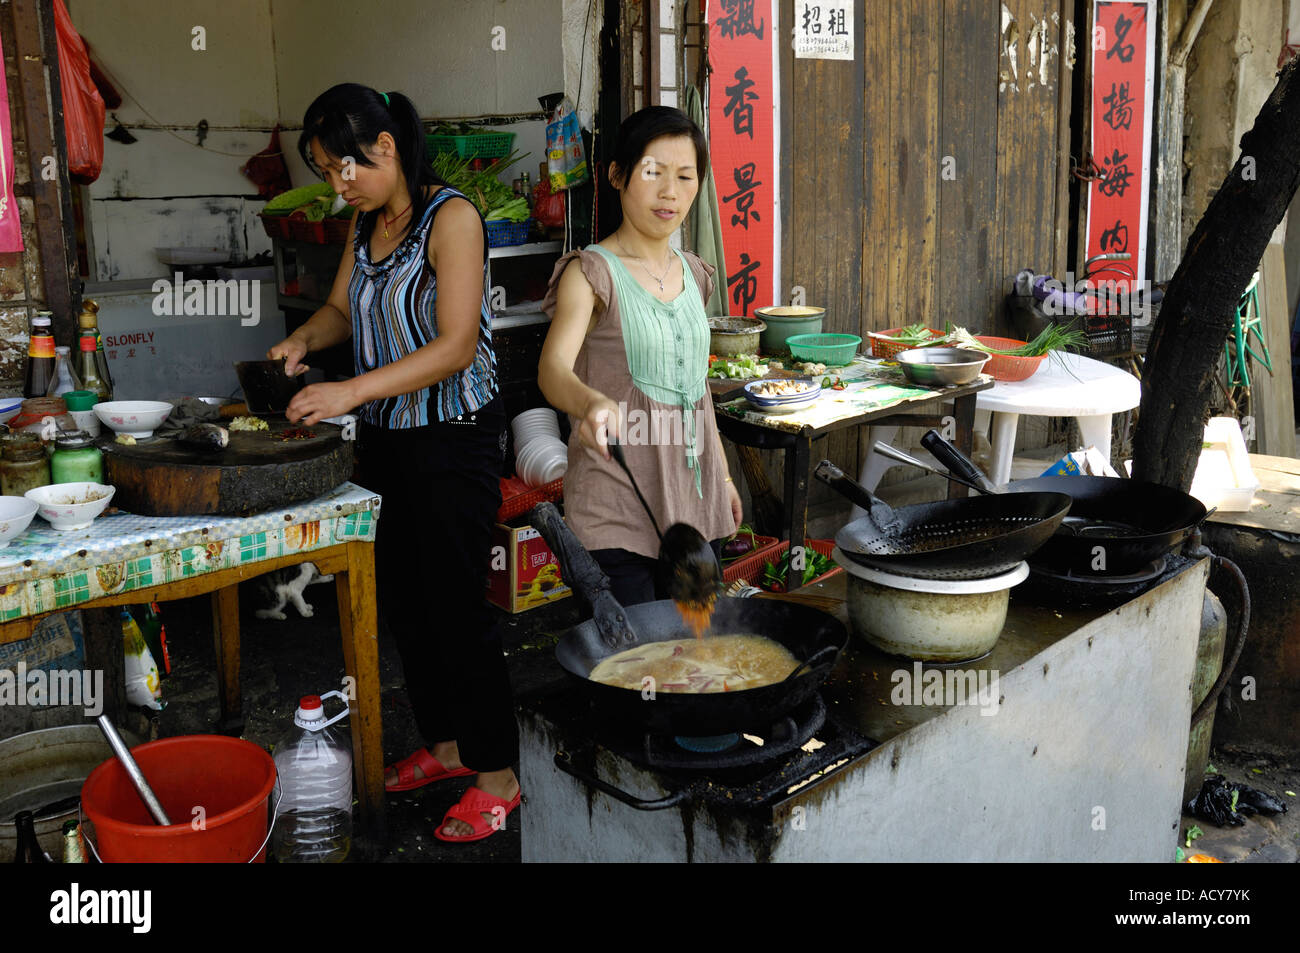 Köche in Straßencafé dient Mahlzeit in Jingdezhen, Jiangxi, China. 16. Juni 2007 Stockfoto